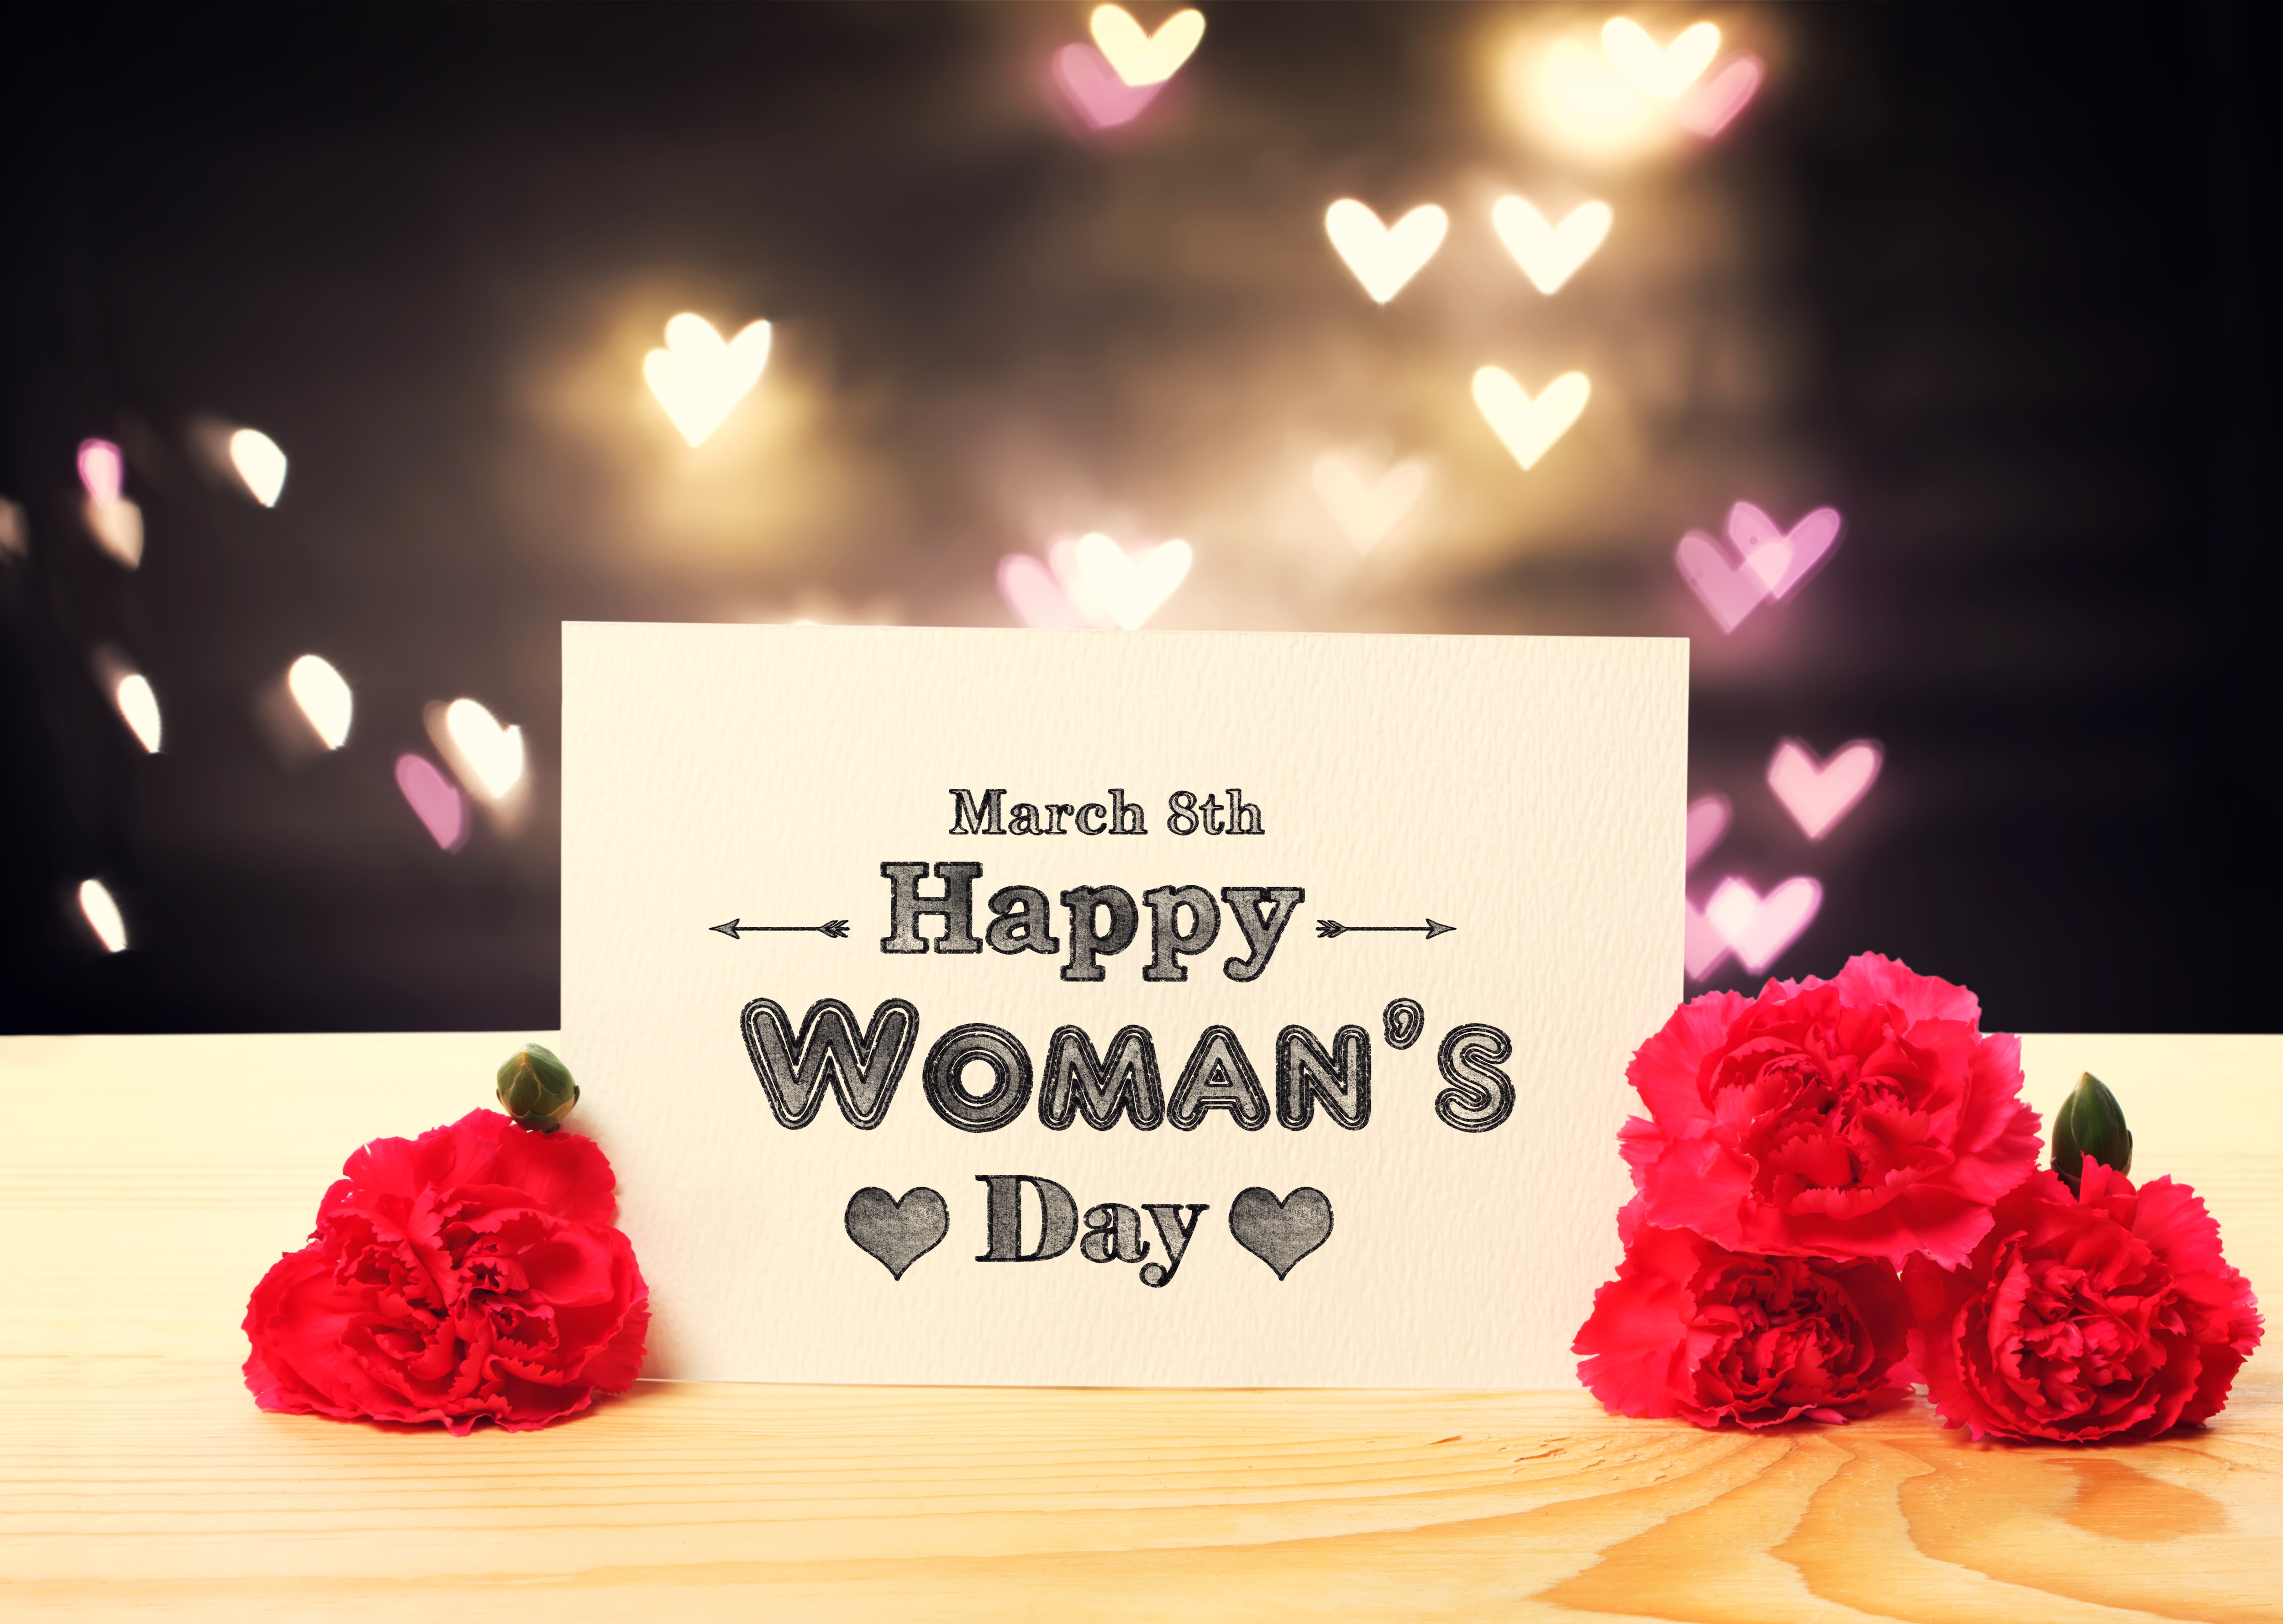 Happy women's day card